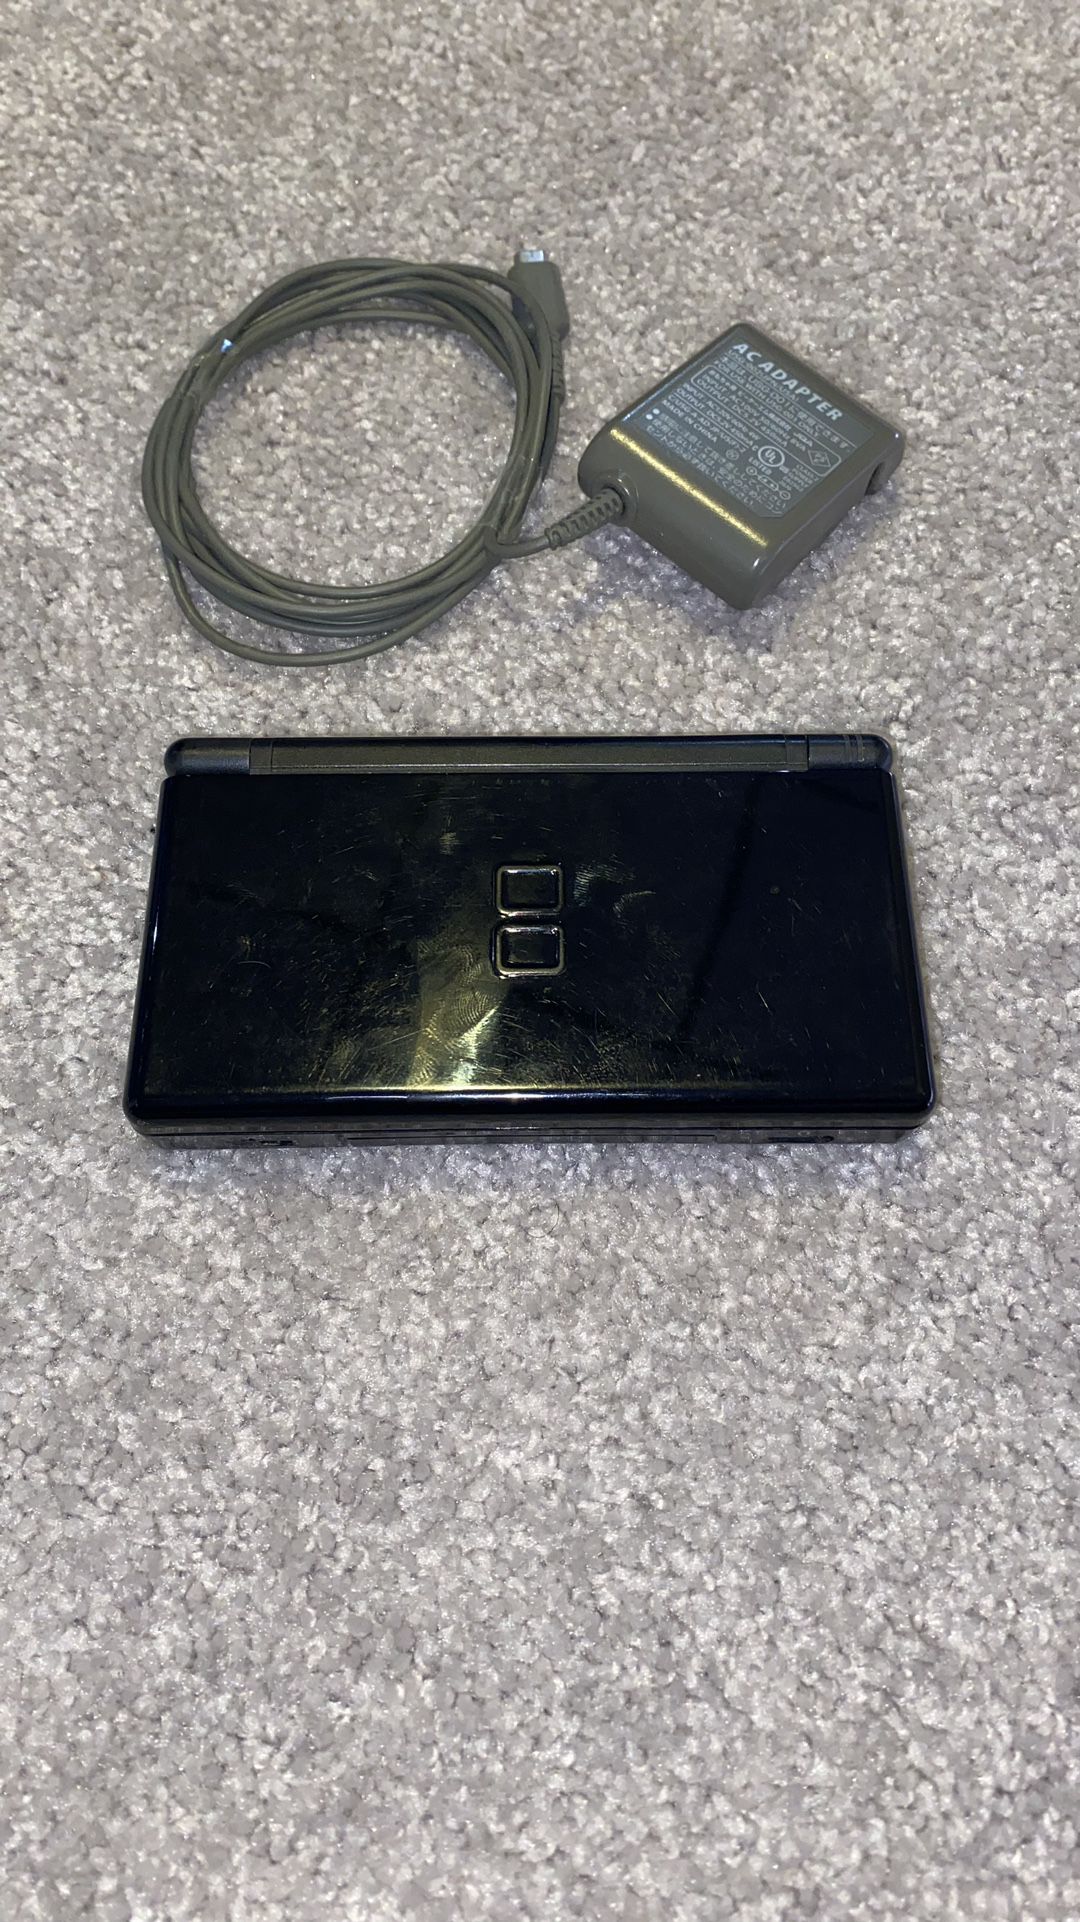  Nintendo DS Lite Console Handheld System Black